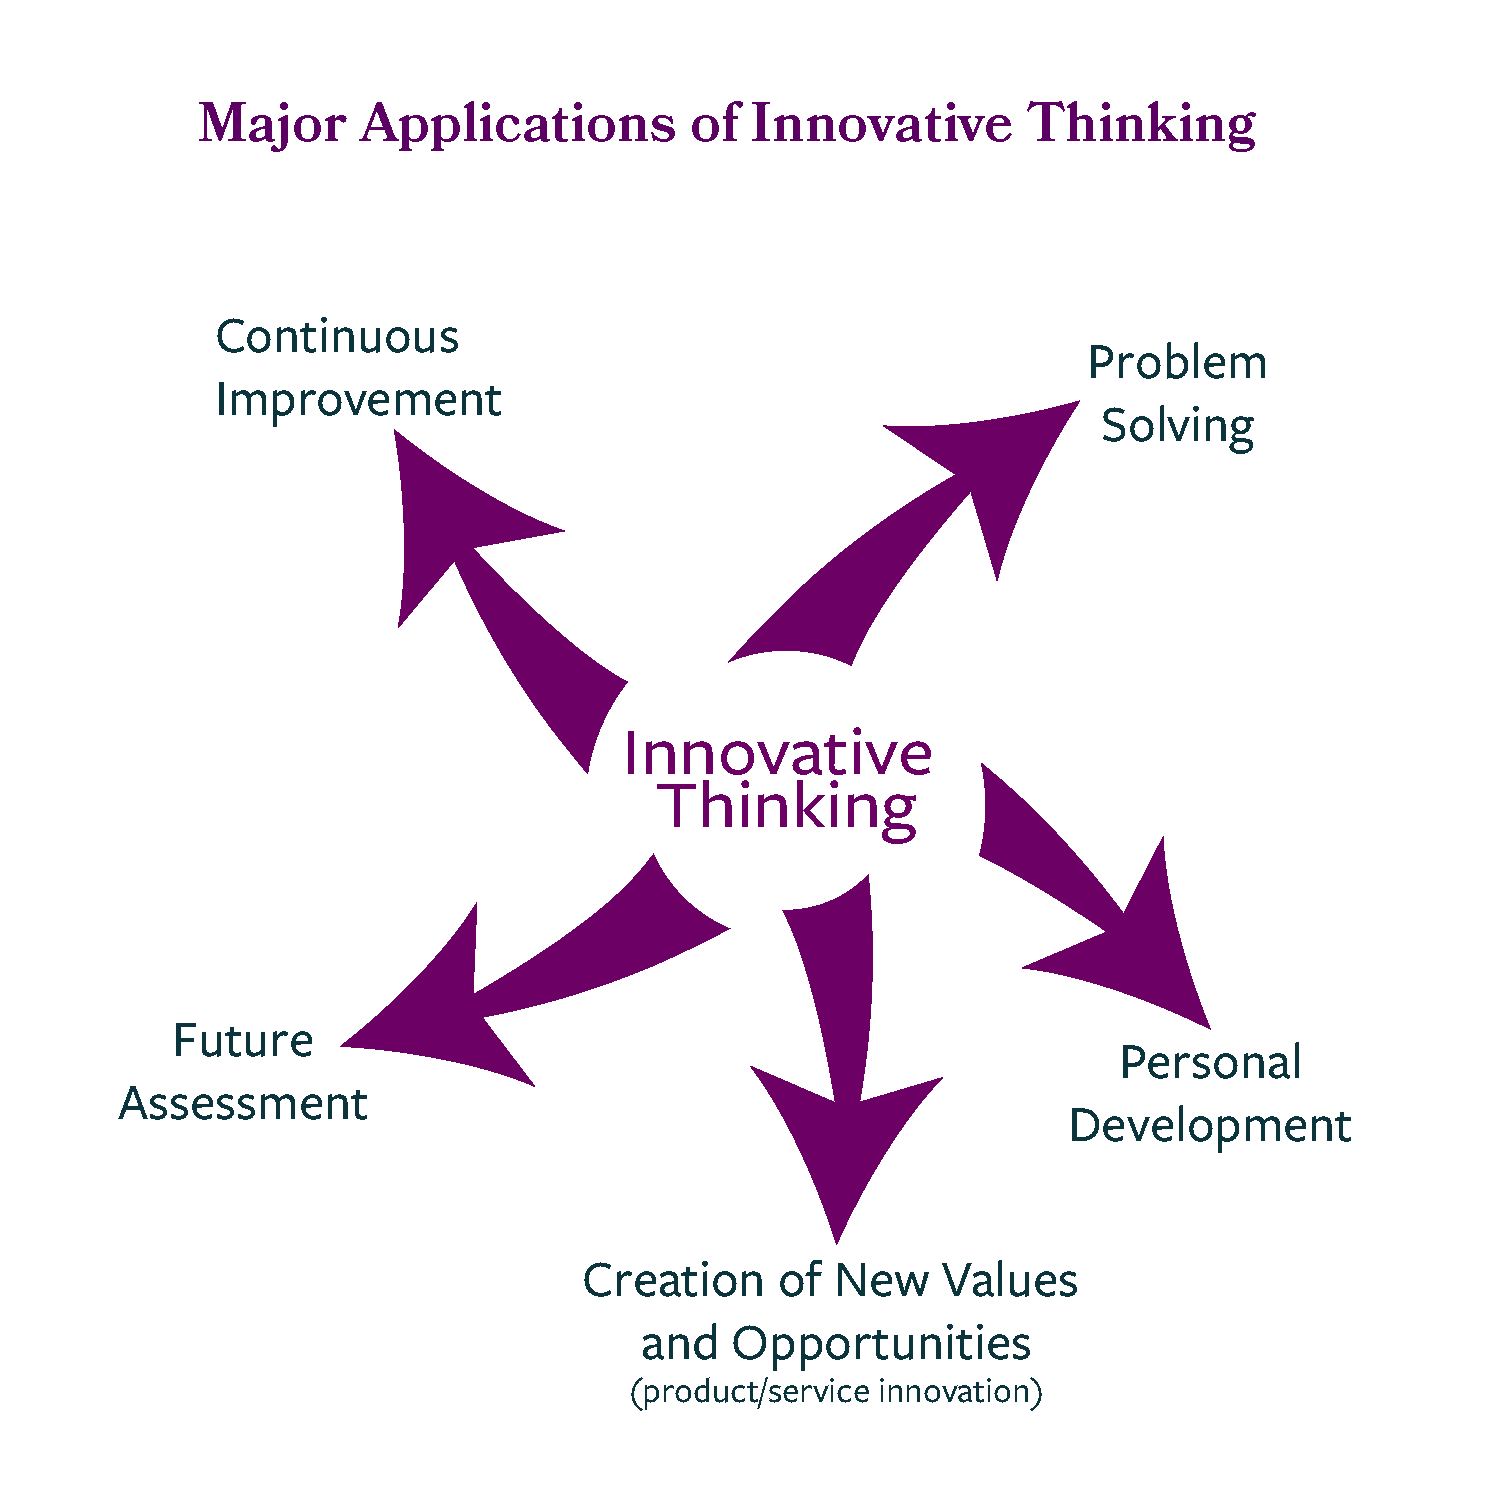 Major Applications of Innovative Thinking